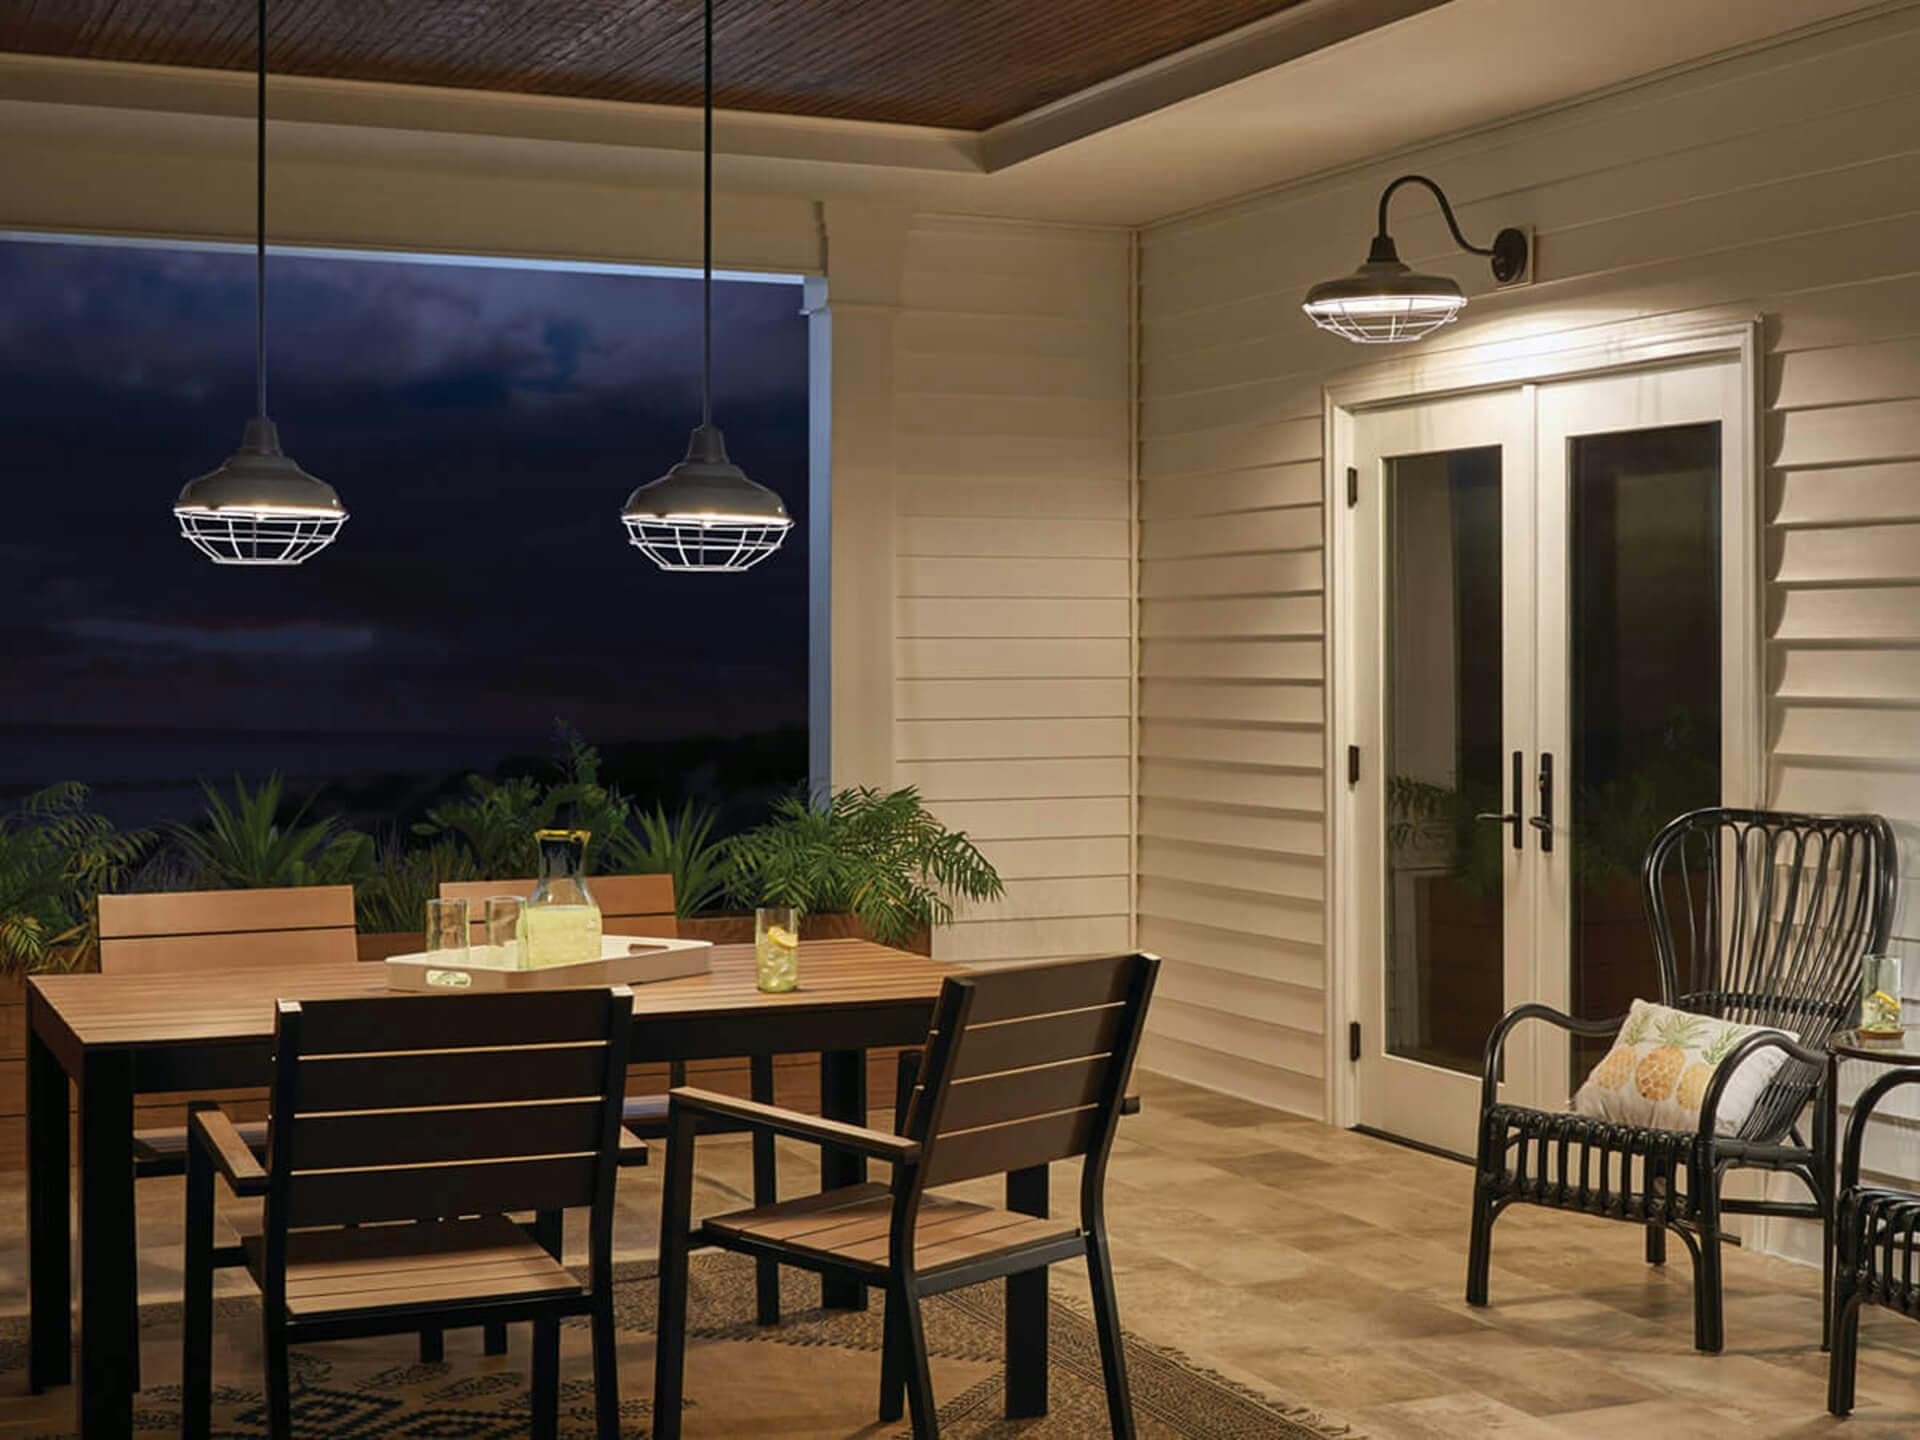 Evening porch with Pier pendant lights